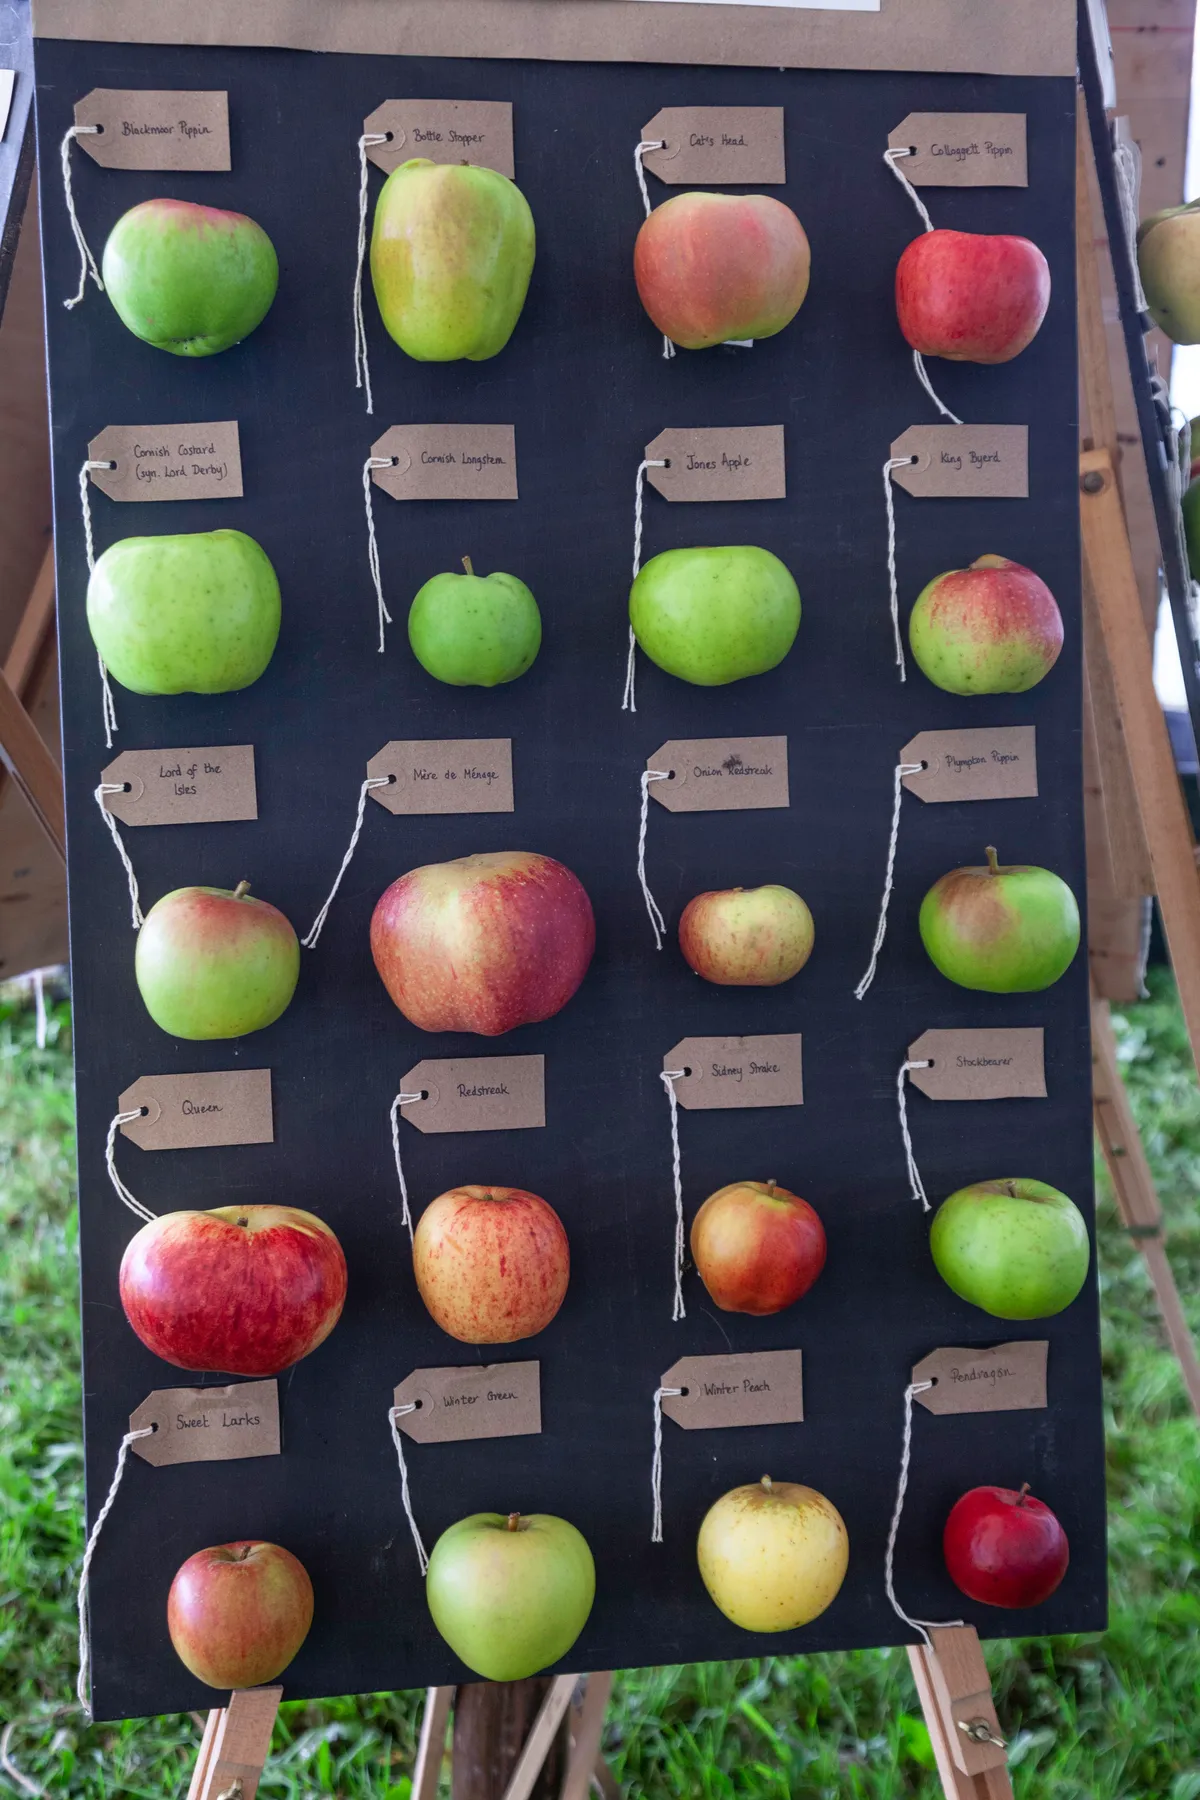 Traditional apple varieties on display at Cotehele, Cornwall. (c) Mel Peters/National Trust